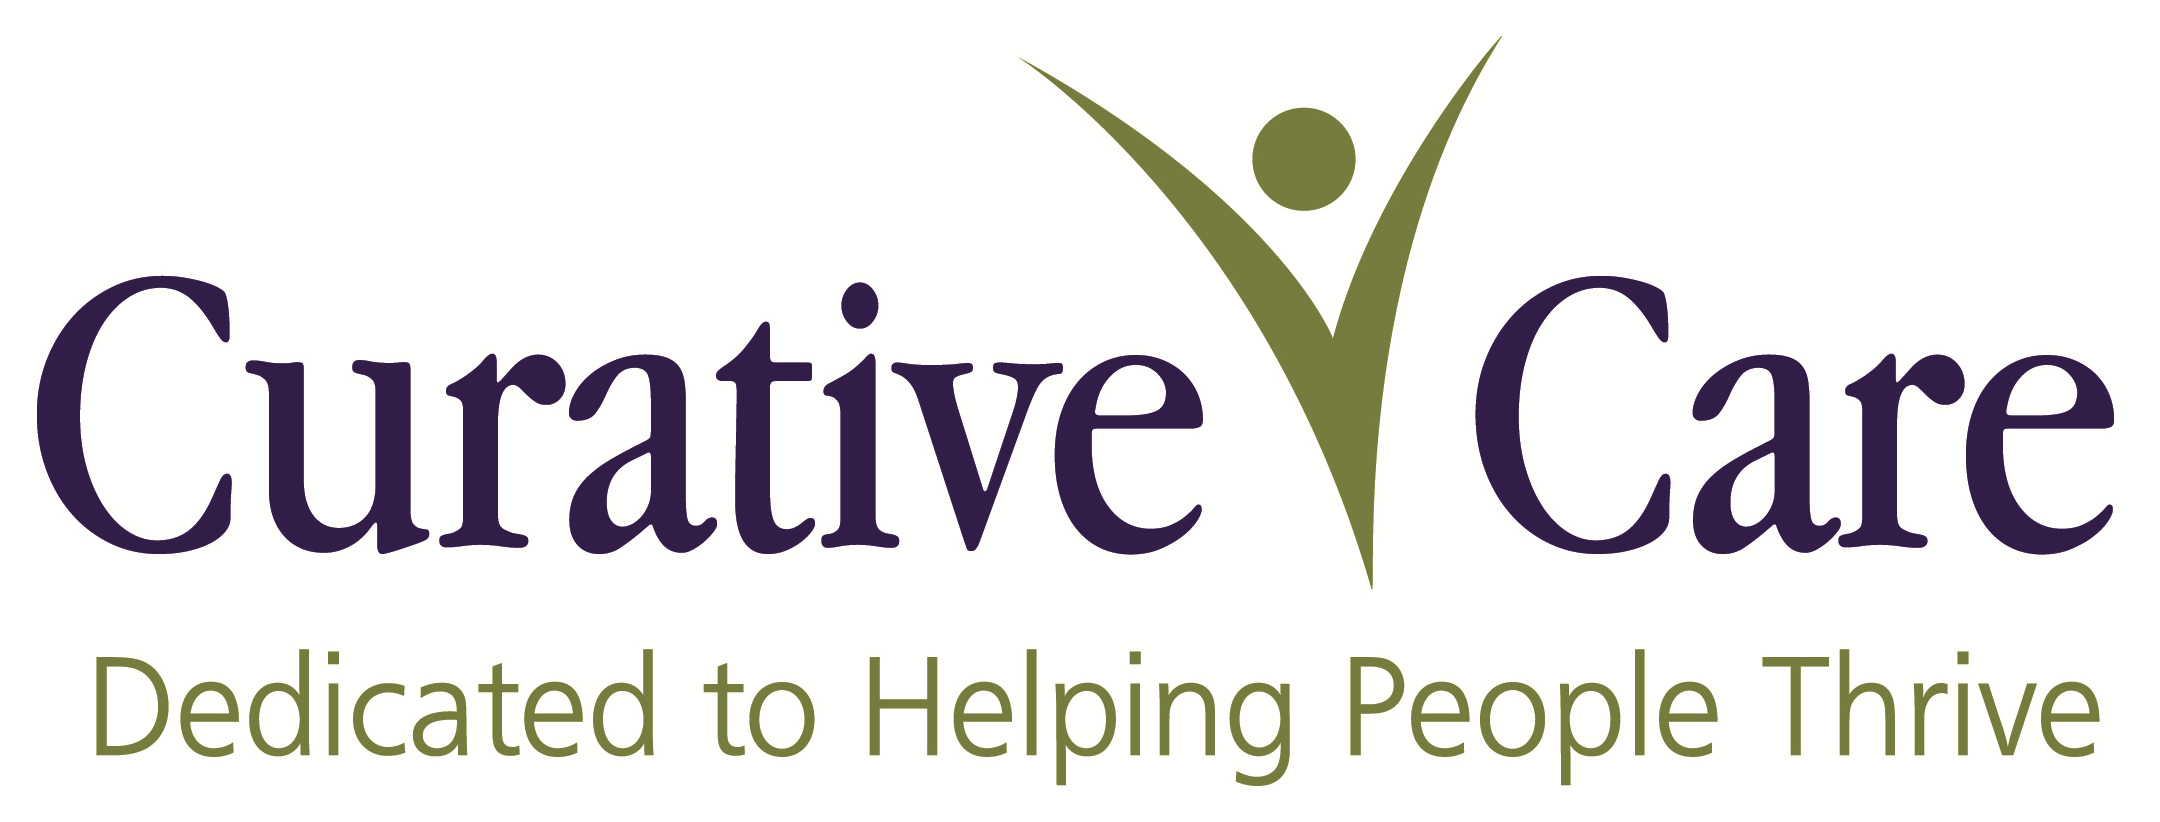 Curative Care Network logo